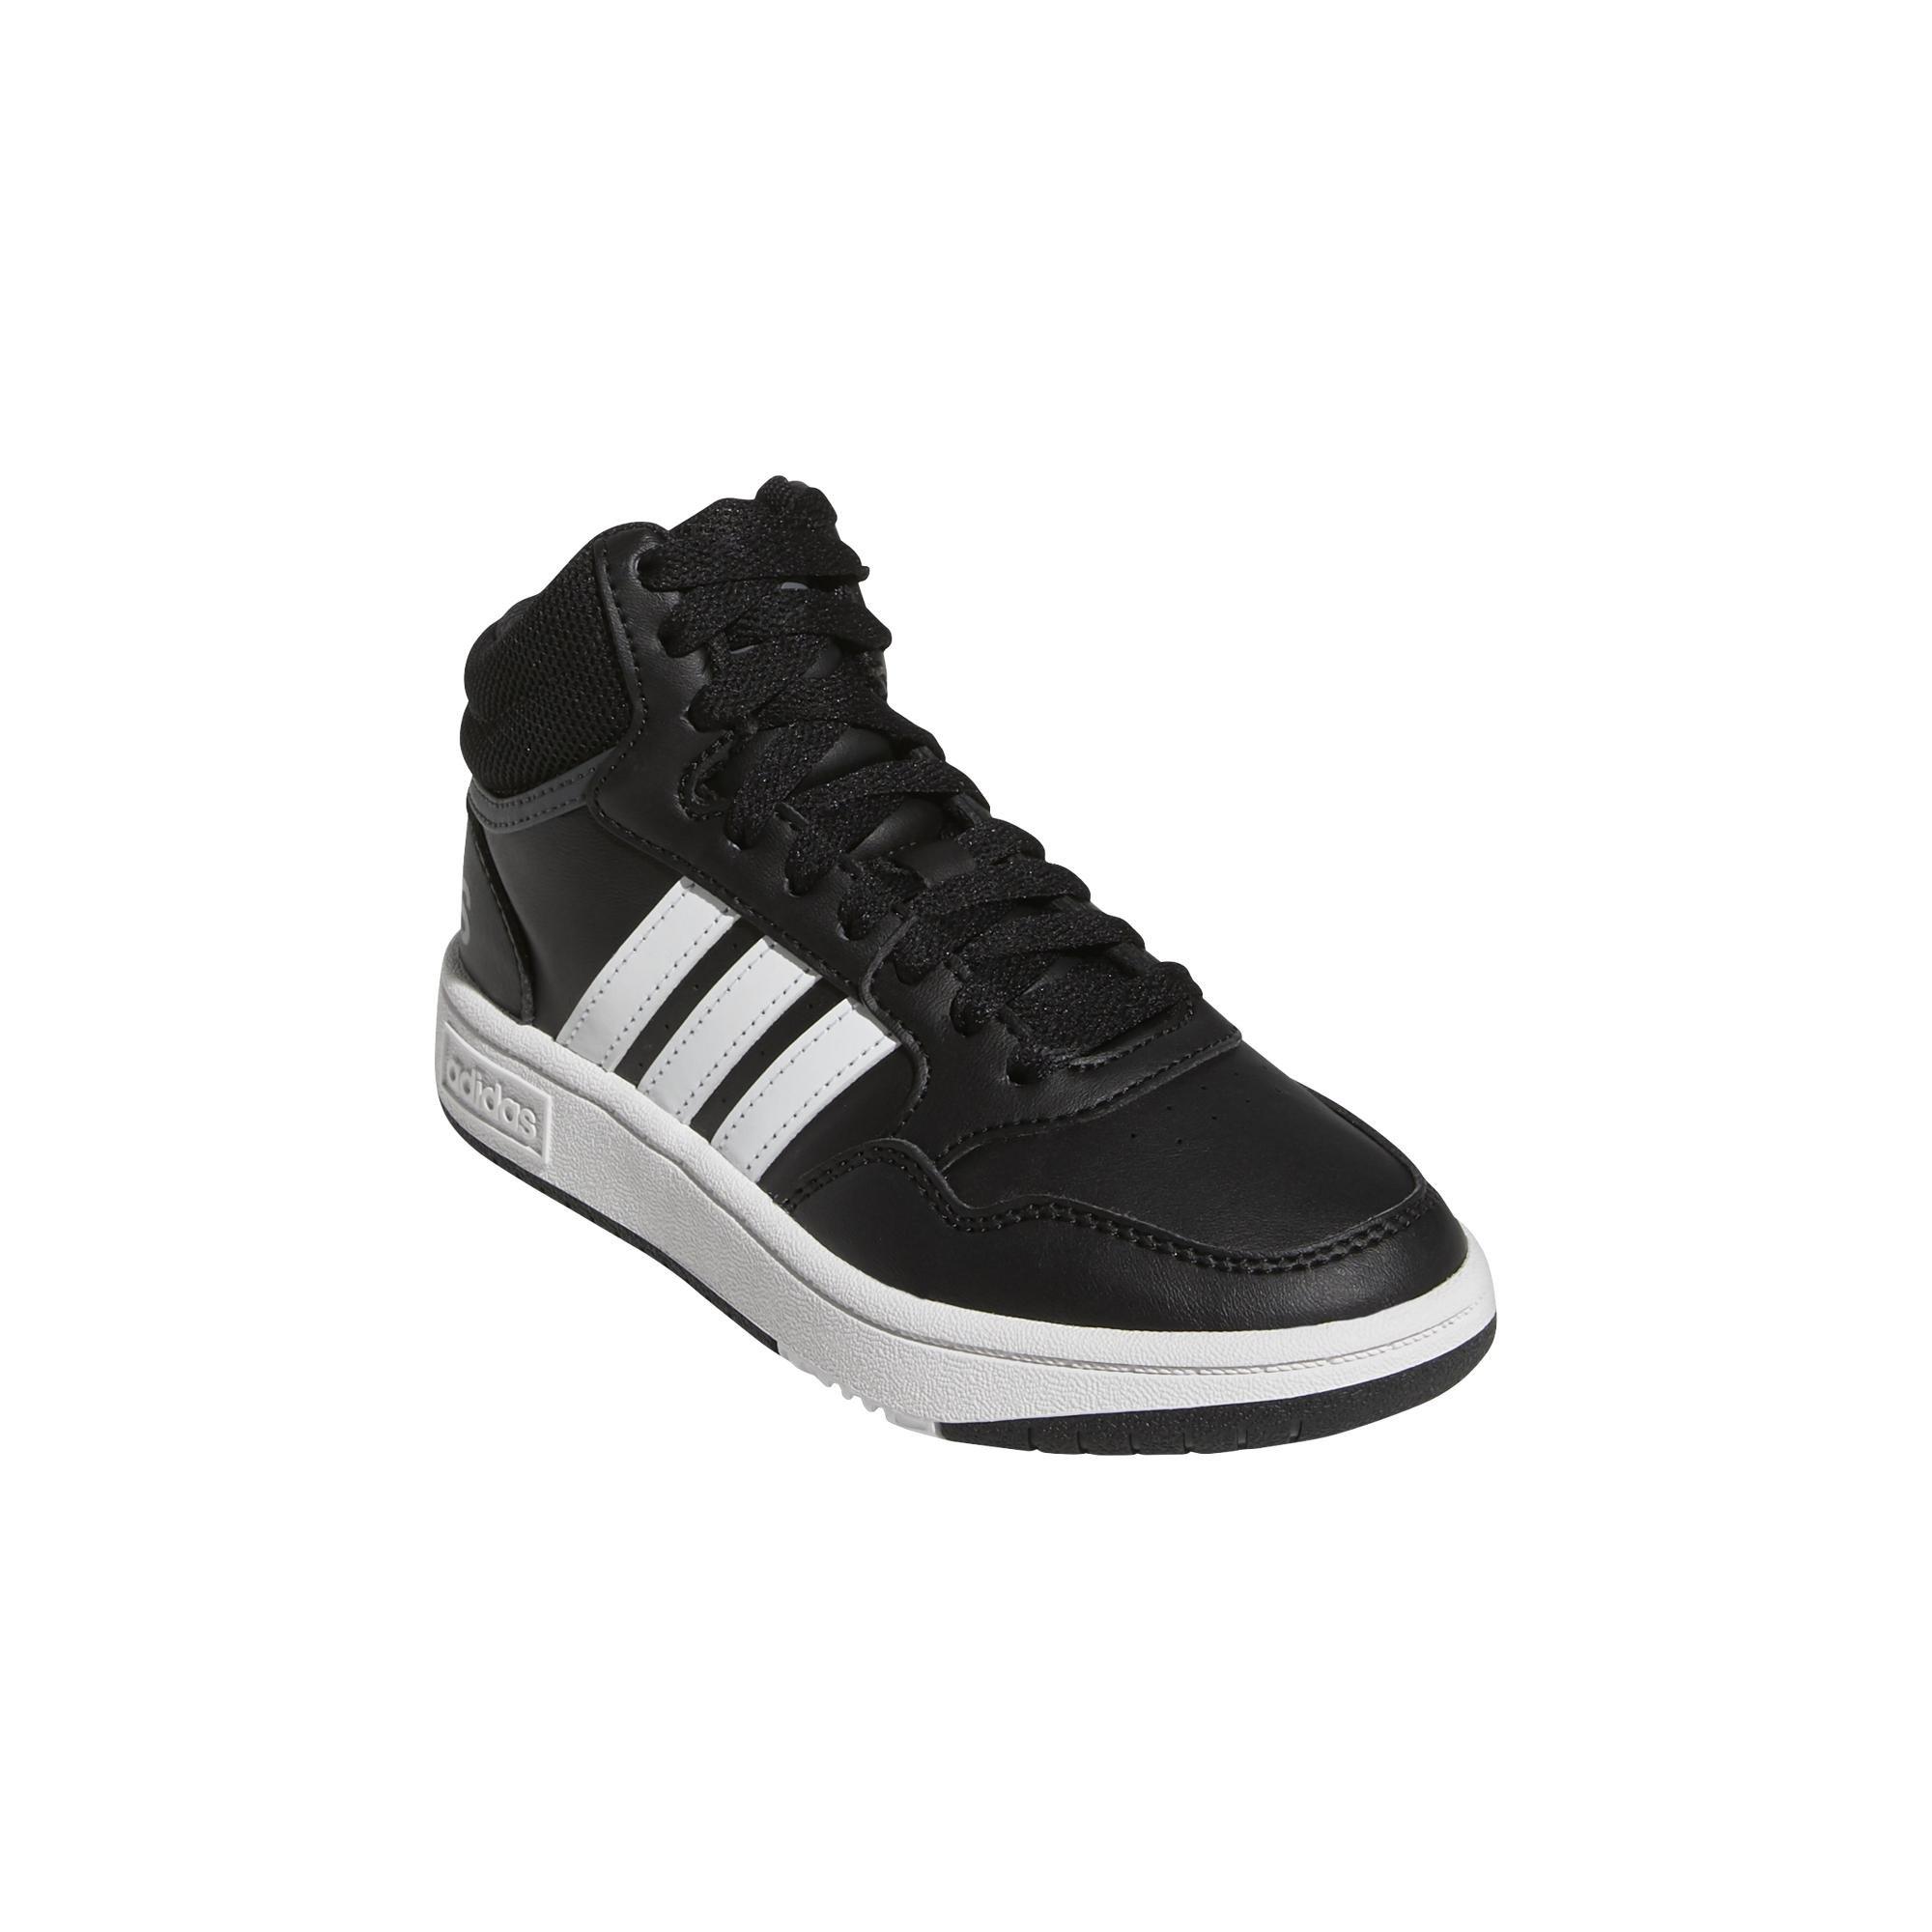 adidas - Hoops Mid Shoes core black Unisex Kids